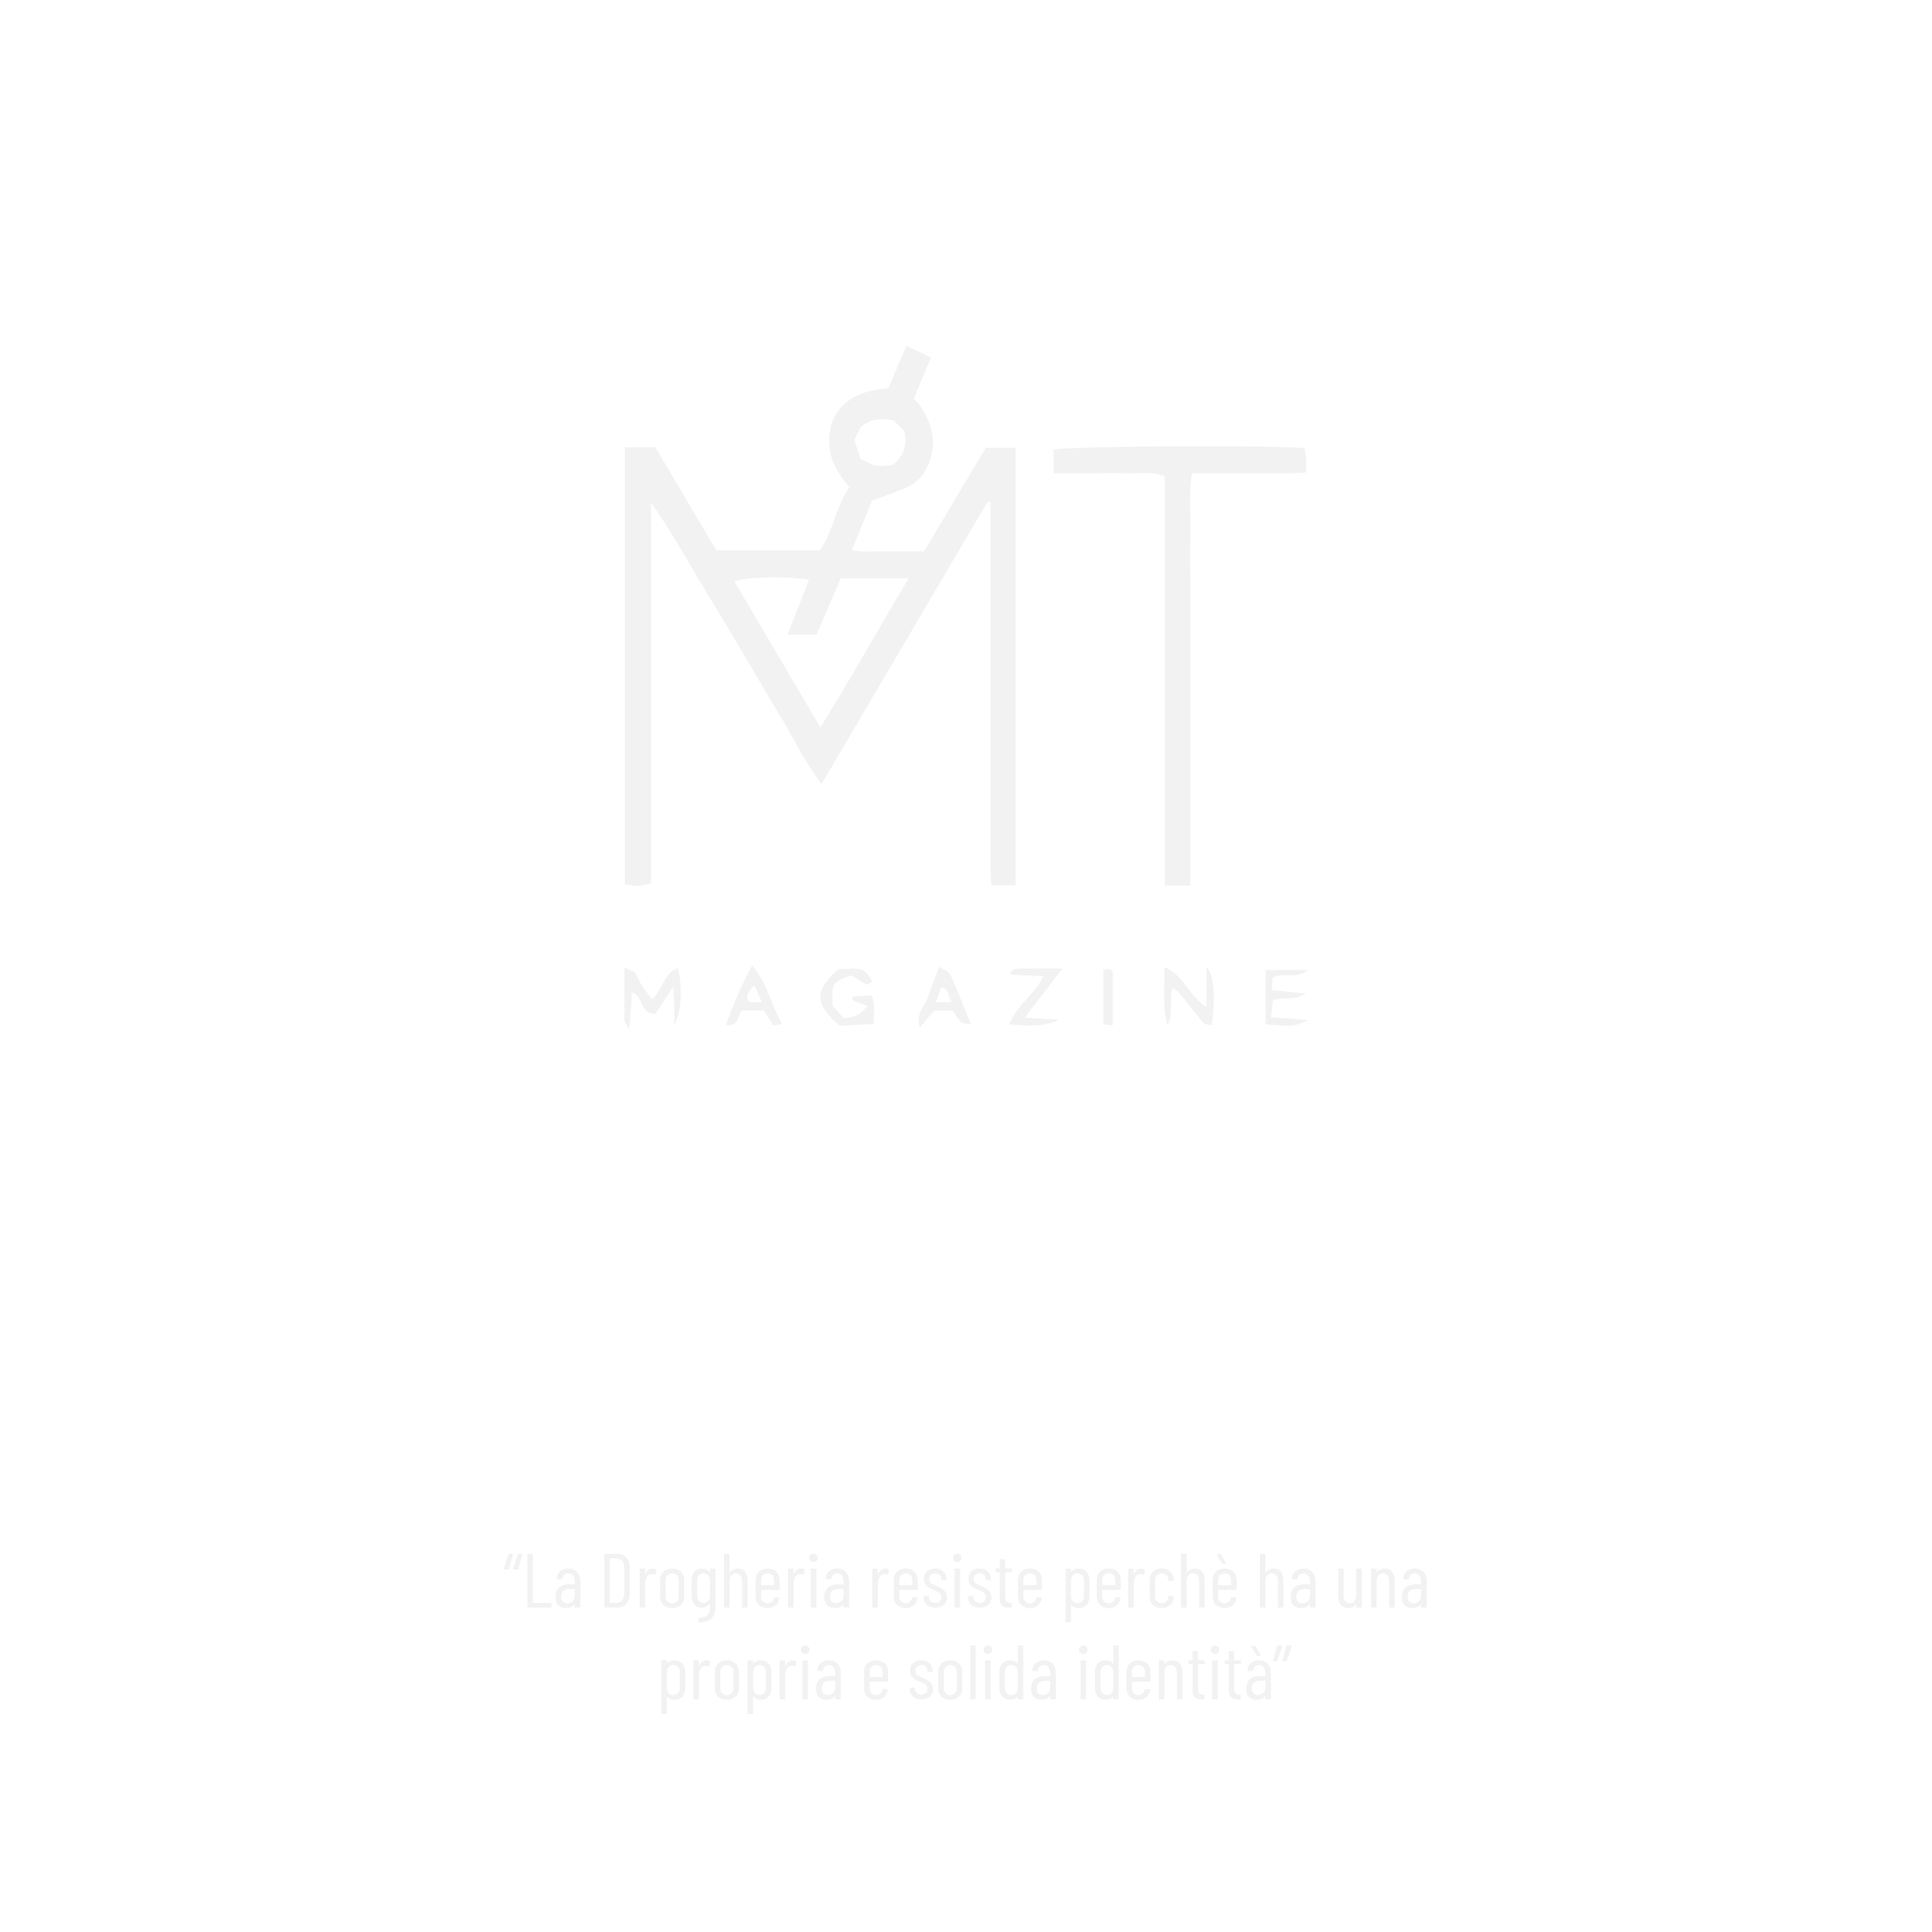 Mt magazine